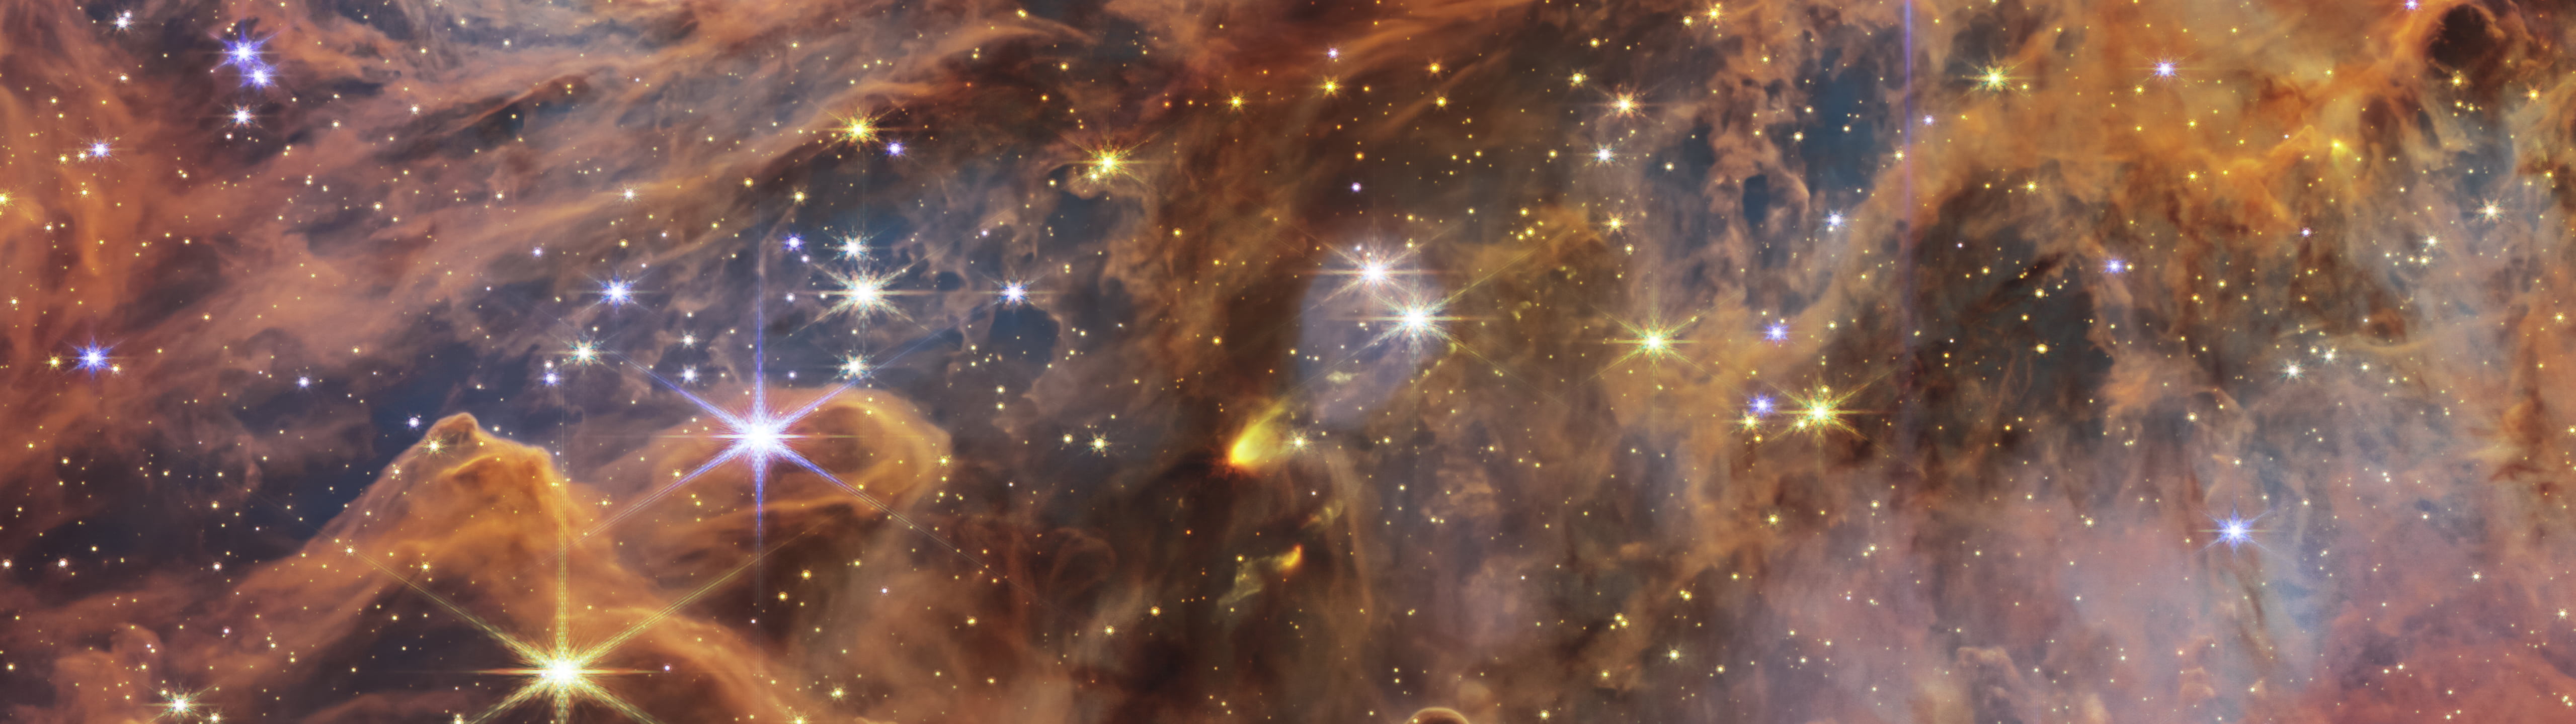 space, James Webb Space Telescope, nebula, Carina Nebula, NASA